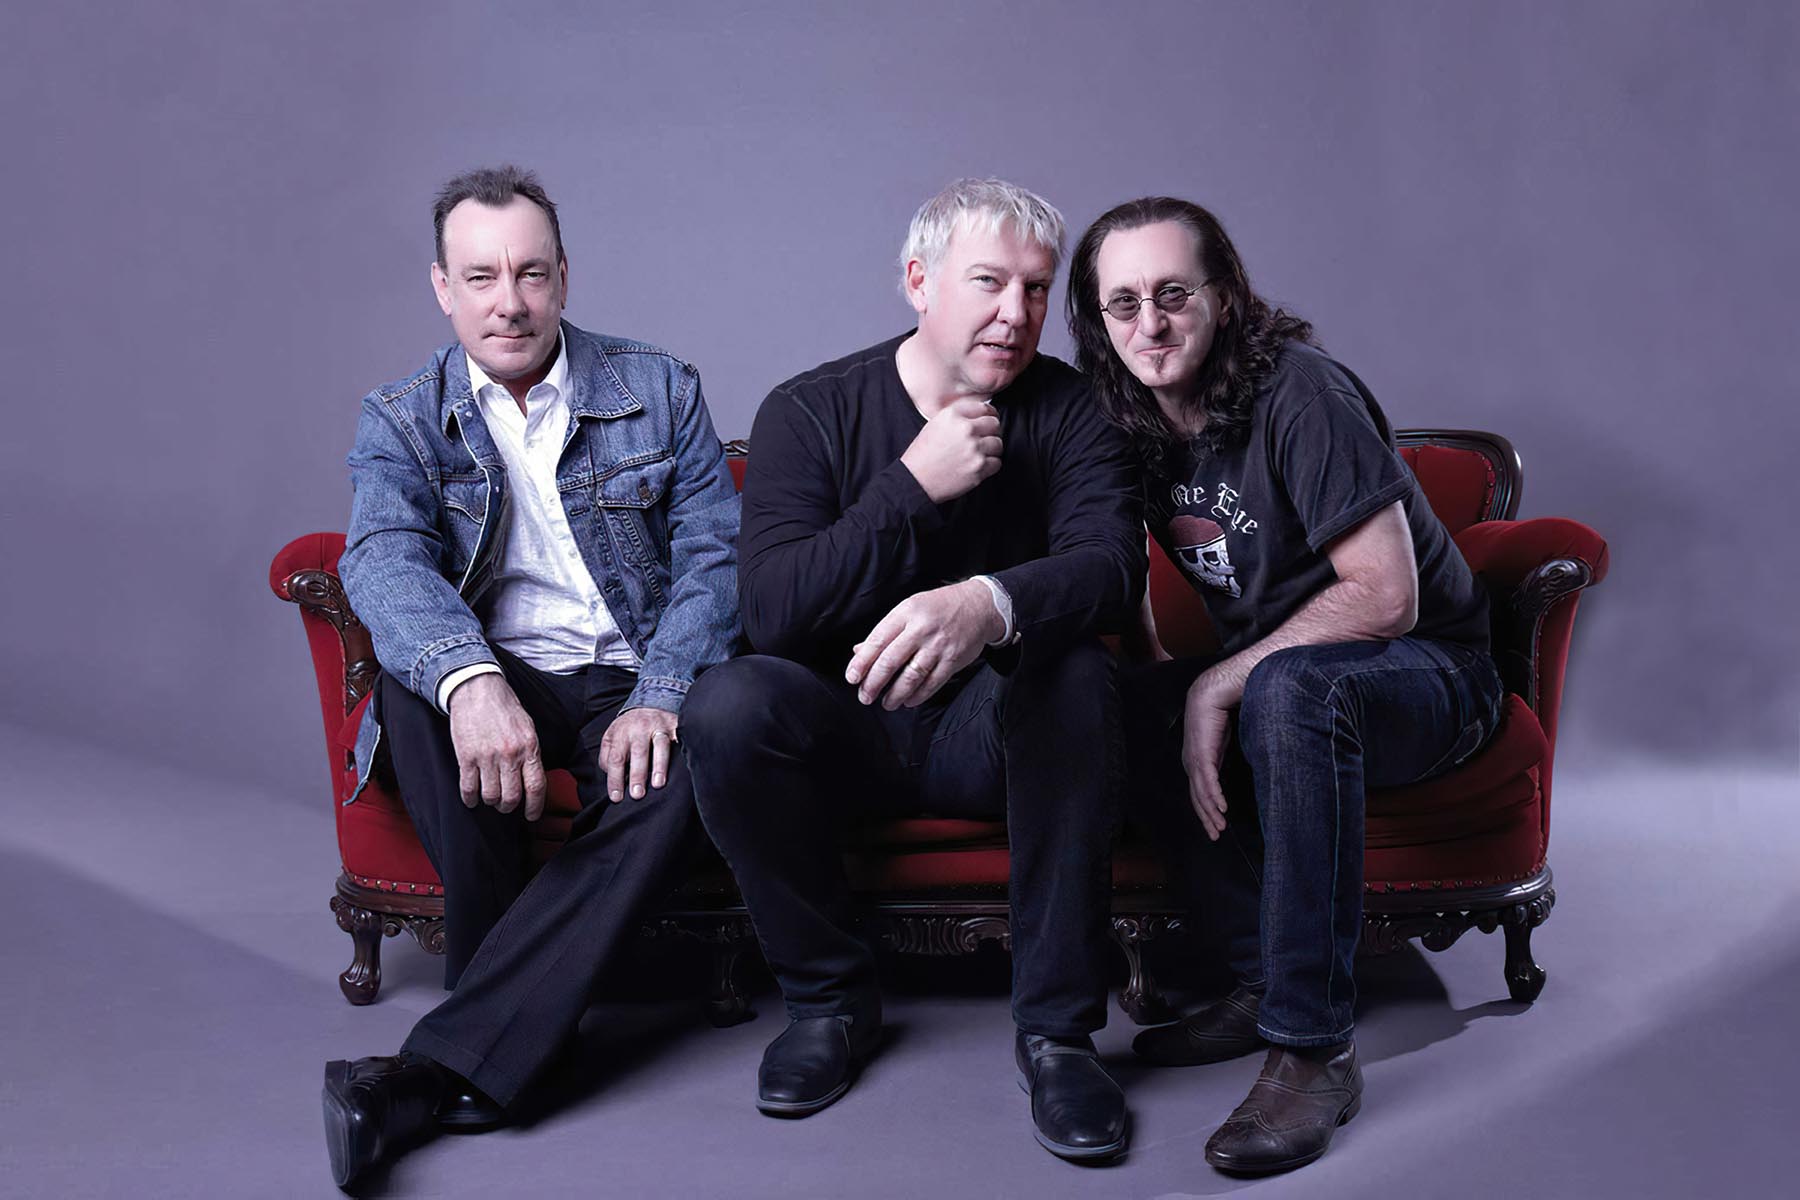 Rush's Geddy Lee on 'Hemispheres' Reissue, Band's Future